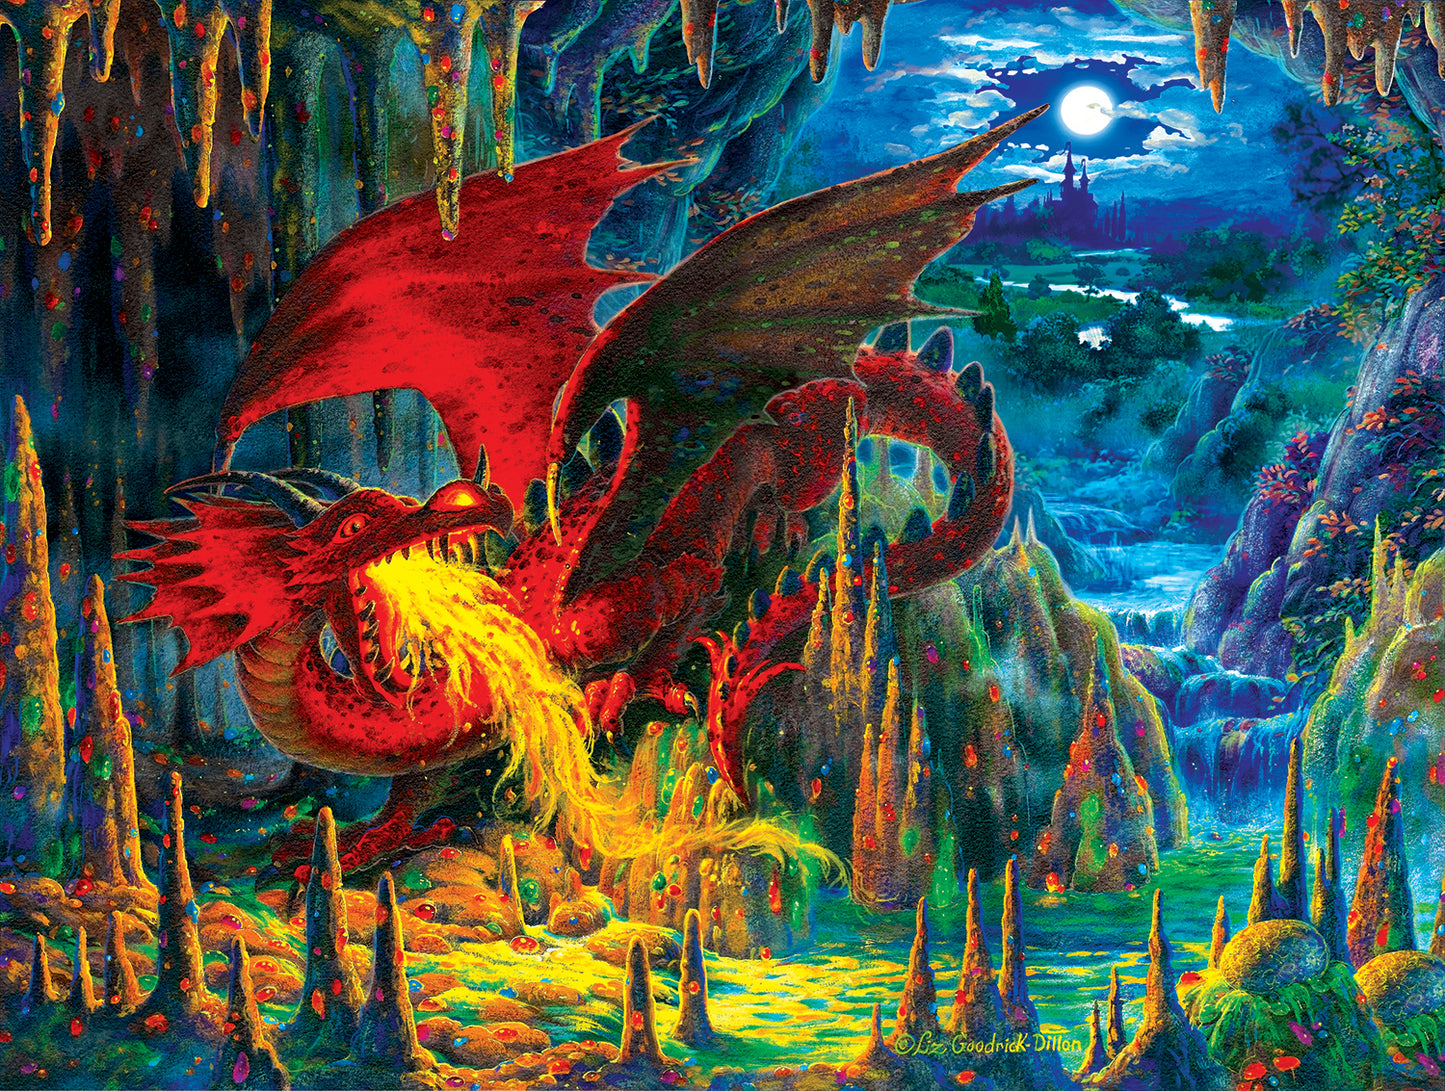 Fire Dragon of Emerald by Liz Goodrick Dillon, 500 Piece Puzzle